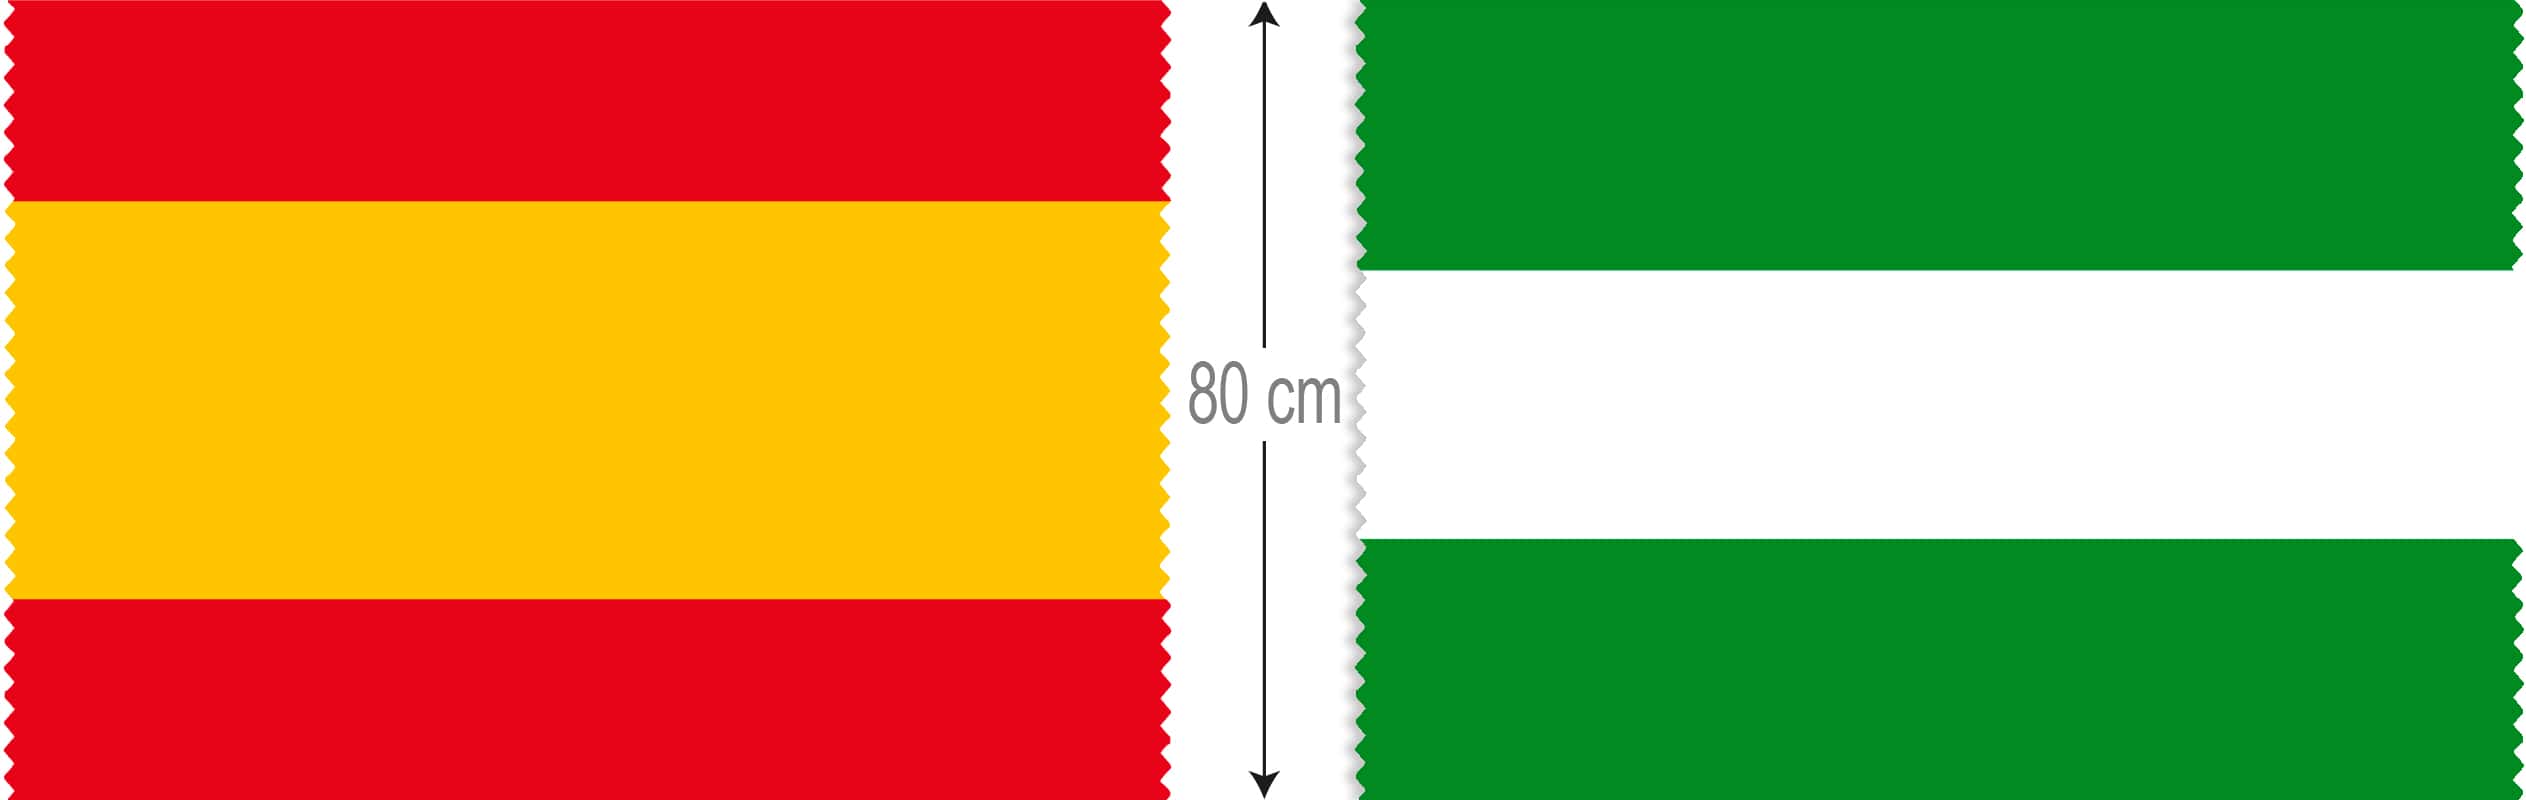 Banderas de España por metro, rollos 35 metros de bandera a 80 cm de ancho, bandera de España y comunidades autónomas (Andalucía)